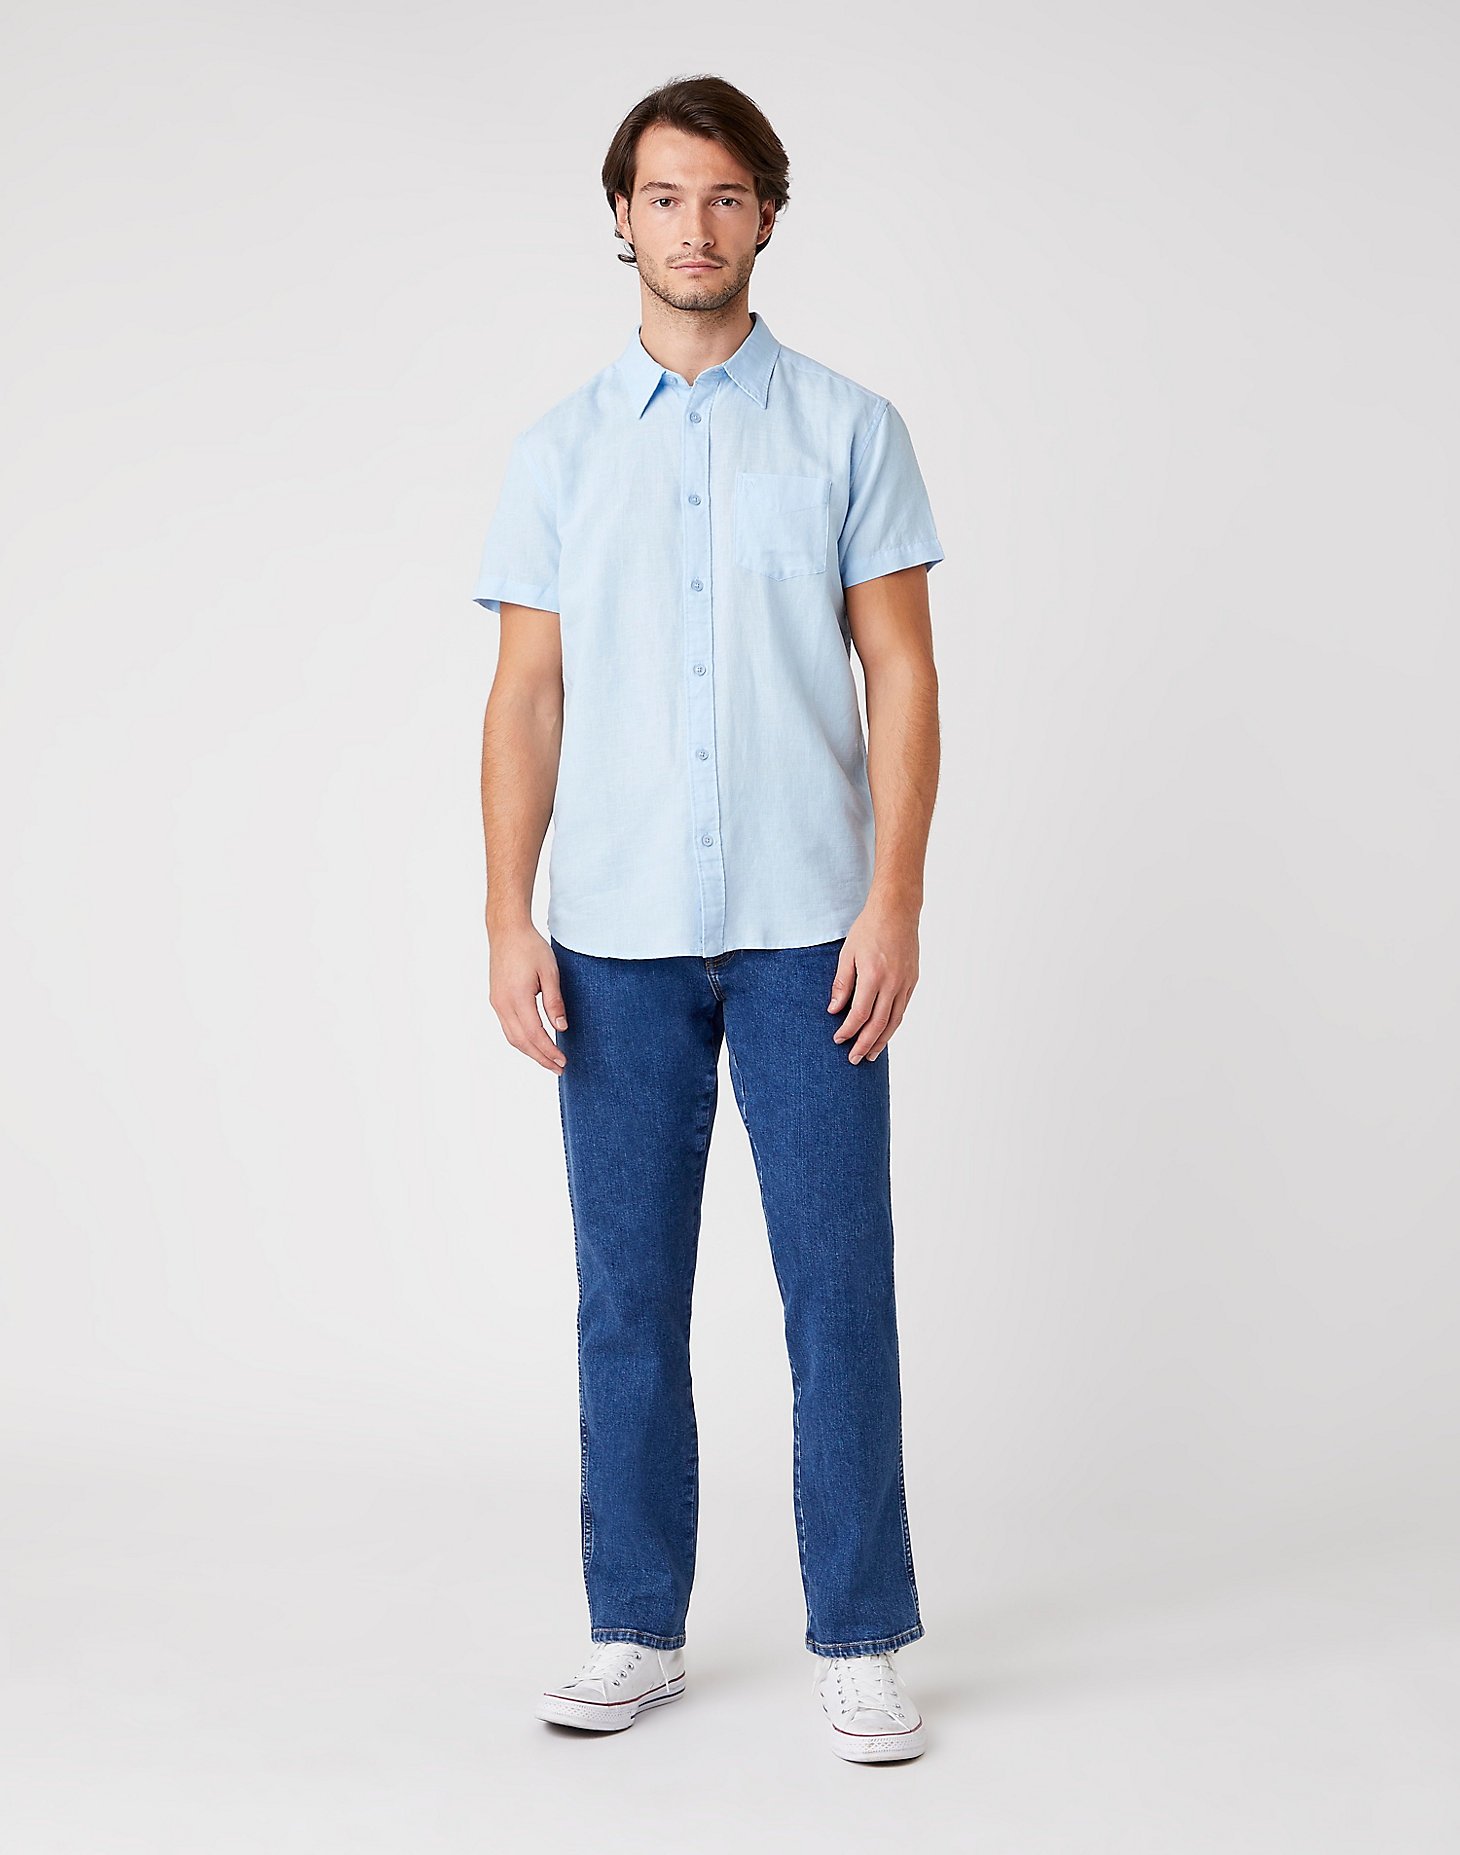 Short Sleeve One Pocket Shirt in Cerulean Blue alternative view 4